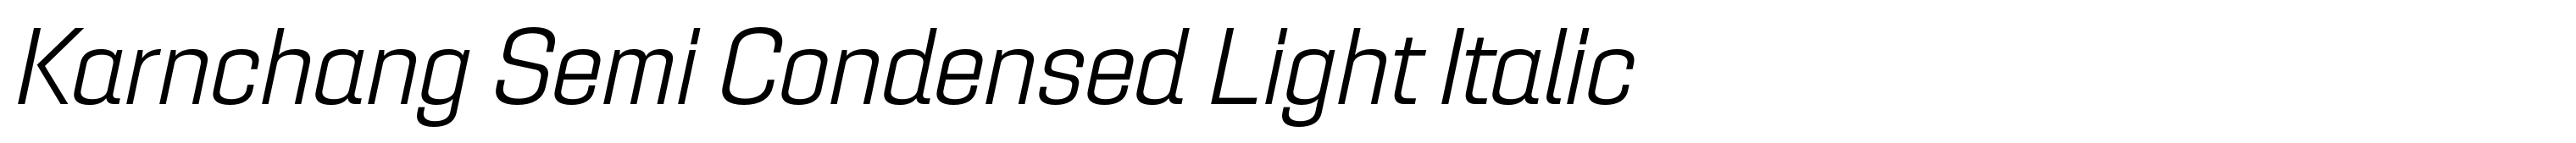 Karnchang Semi Condensed Light Italic